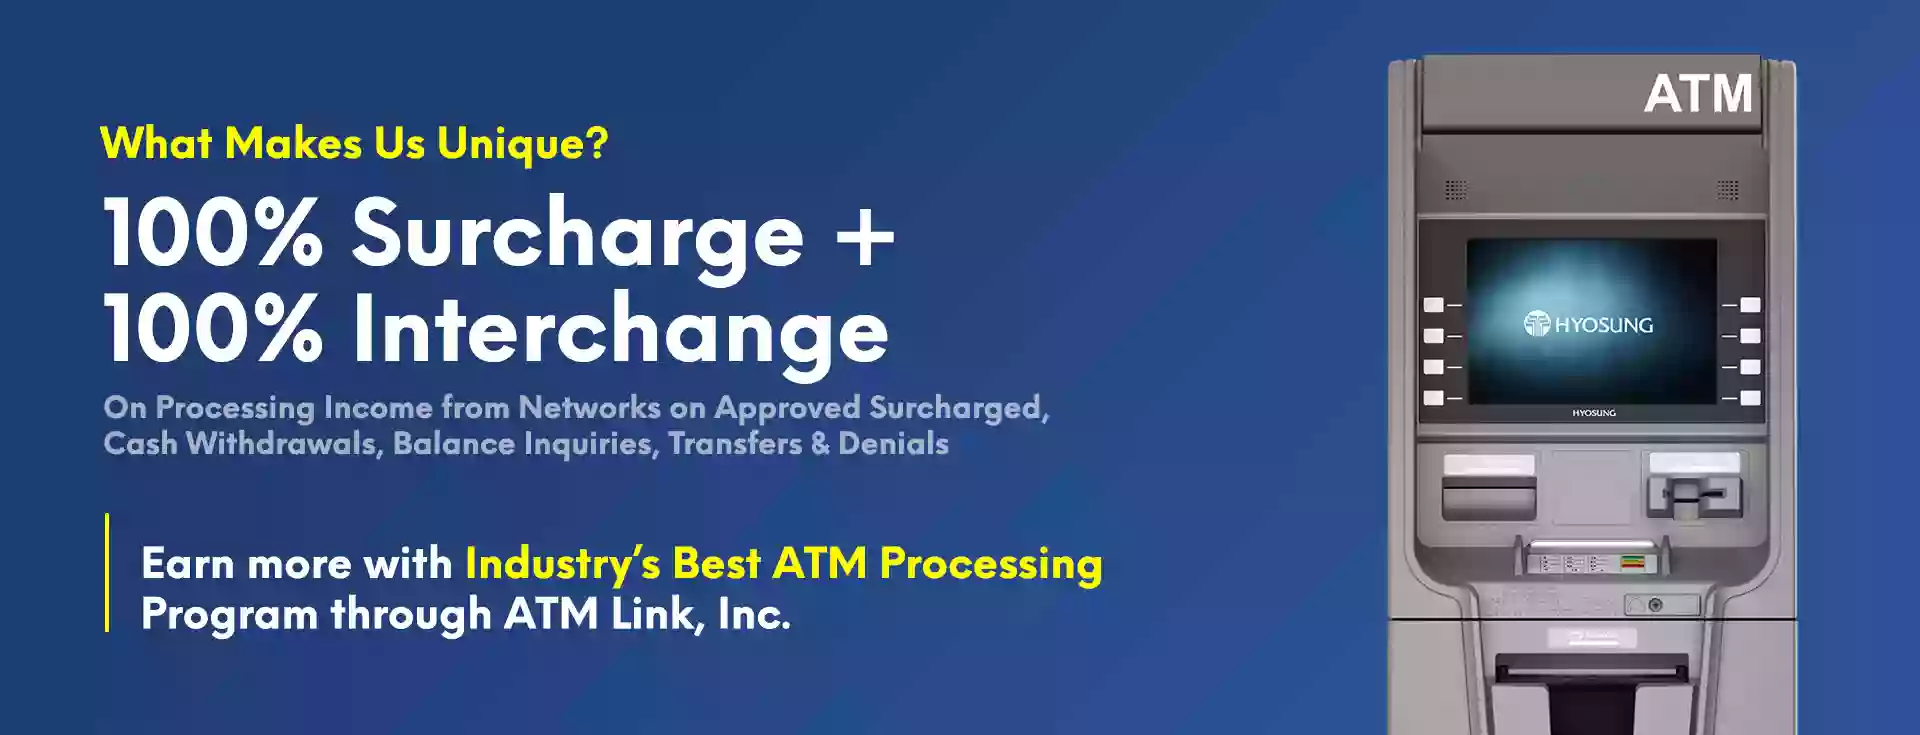 ATM (ATM Link, Inc.)